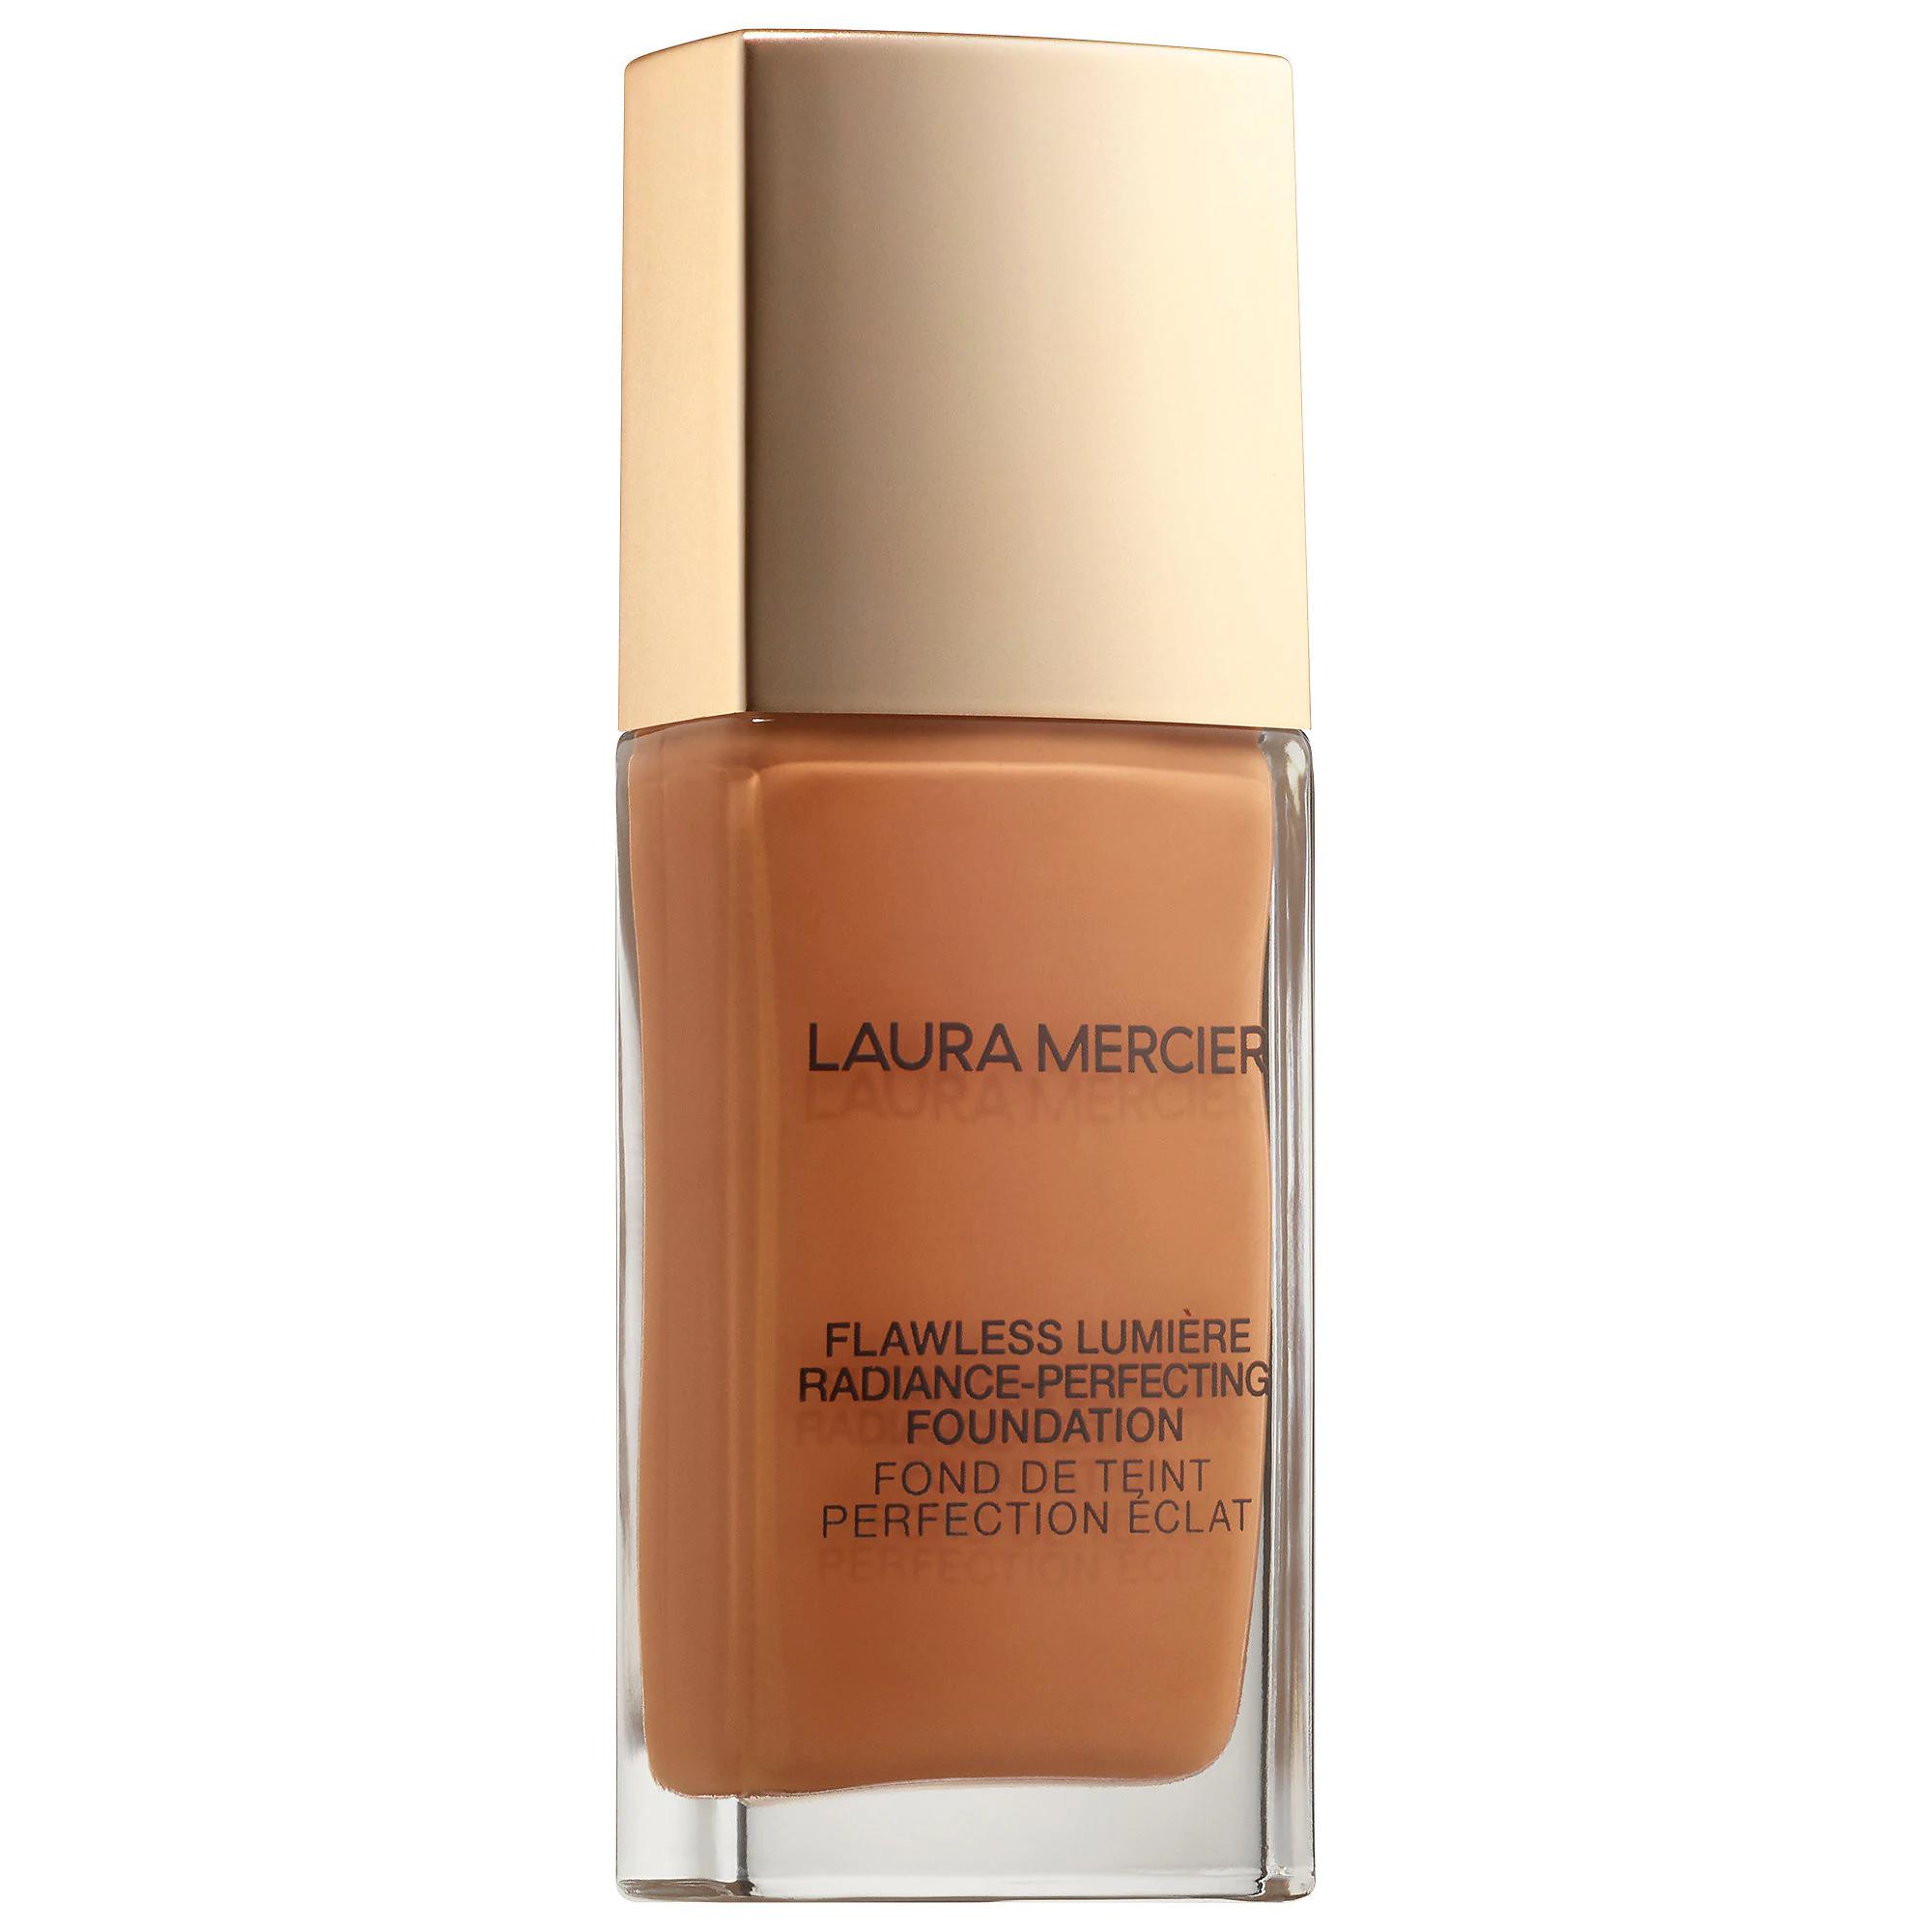 Laura Mercier Flawless Lumiere Radiance-Perfecting Foundation Nutmeg 5C1